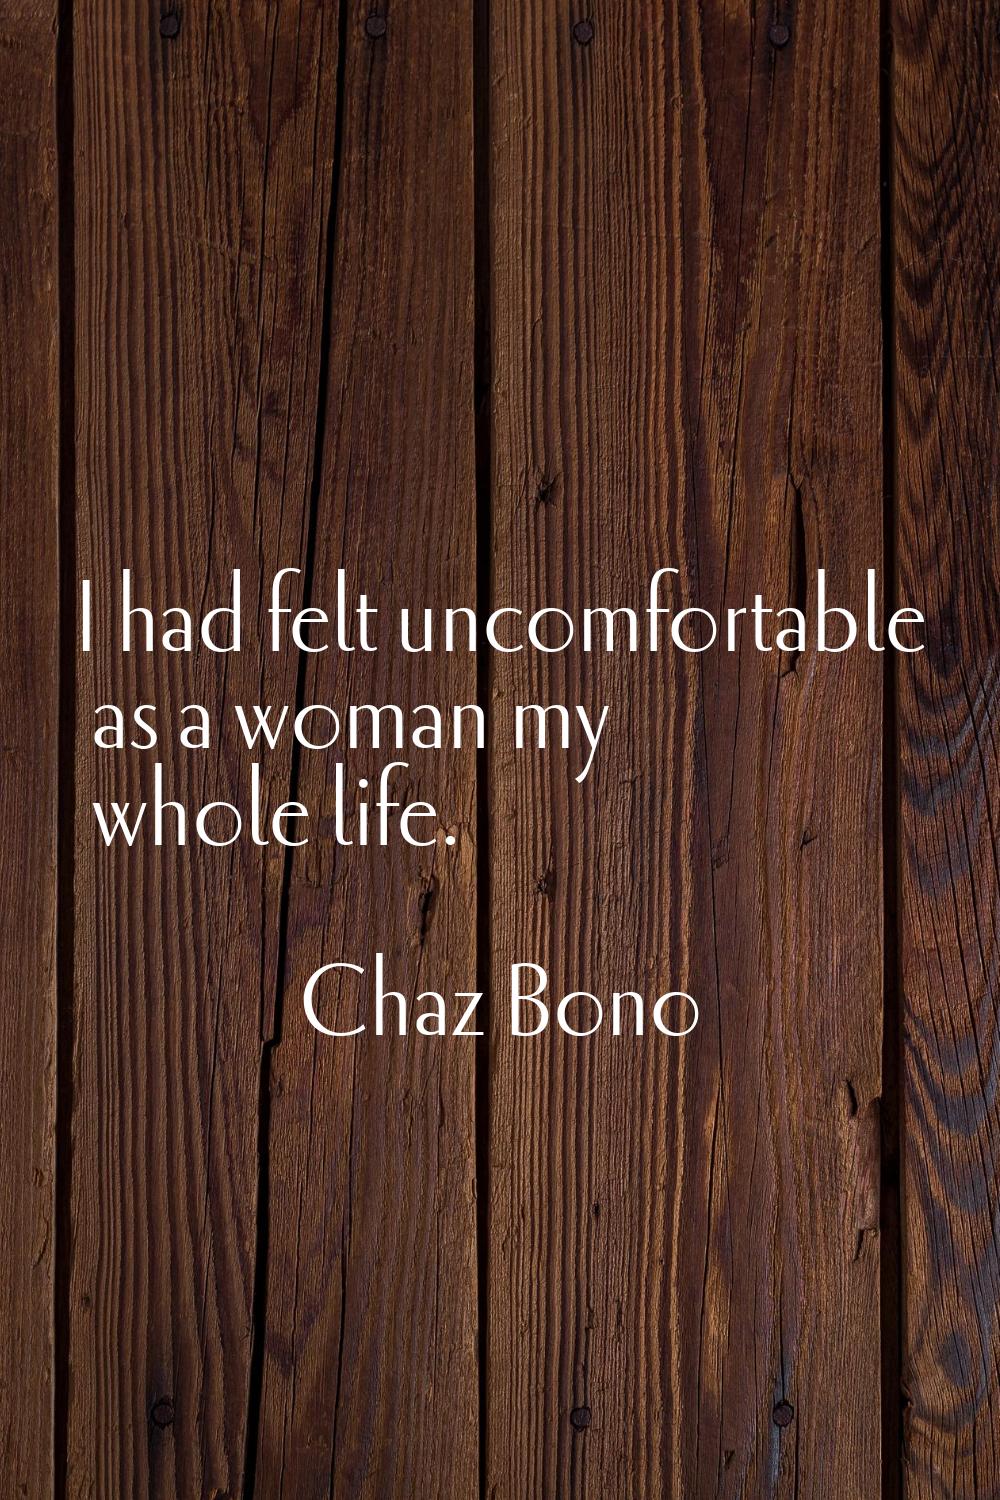 I had felt uncomfortable as a woman my whole life.